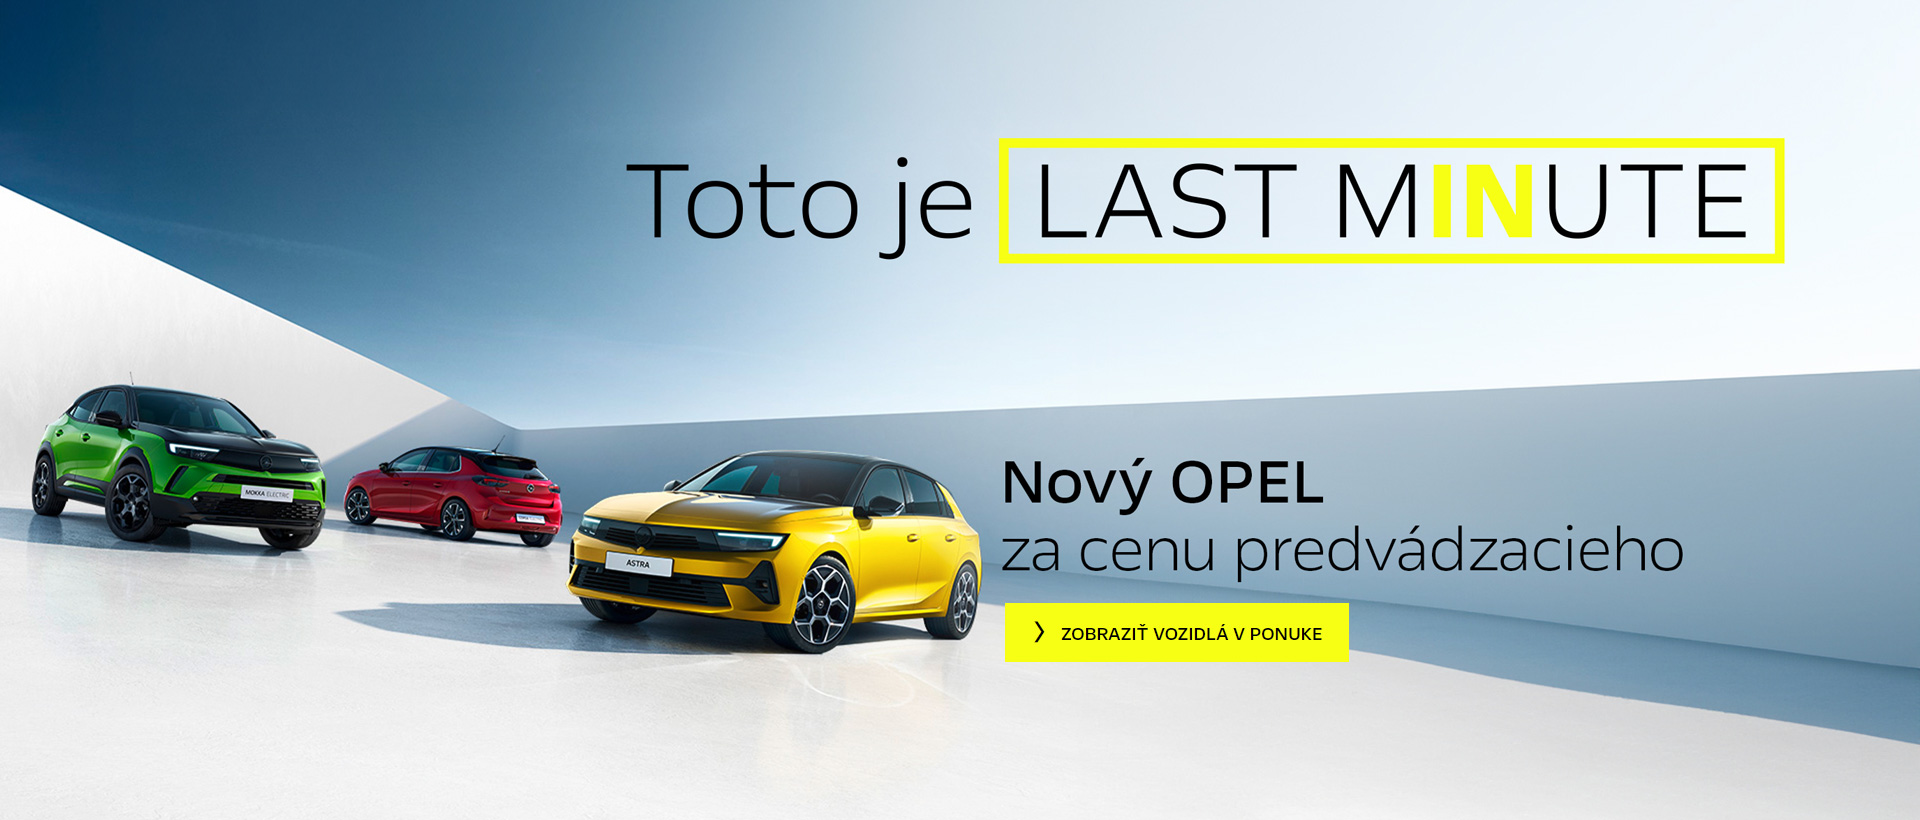 Opel last minute